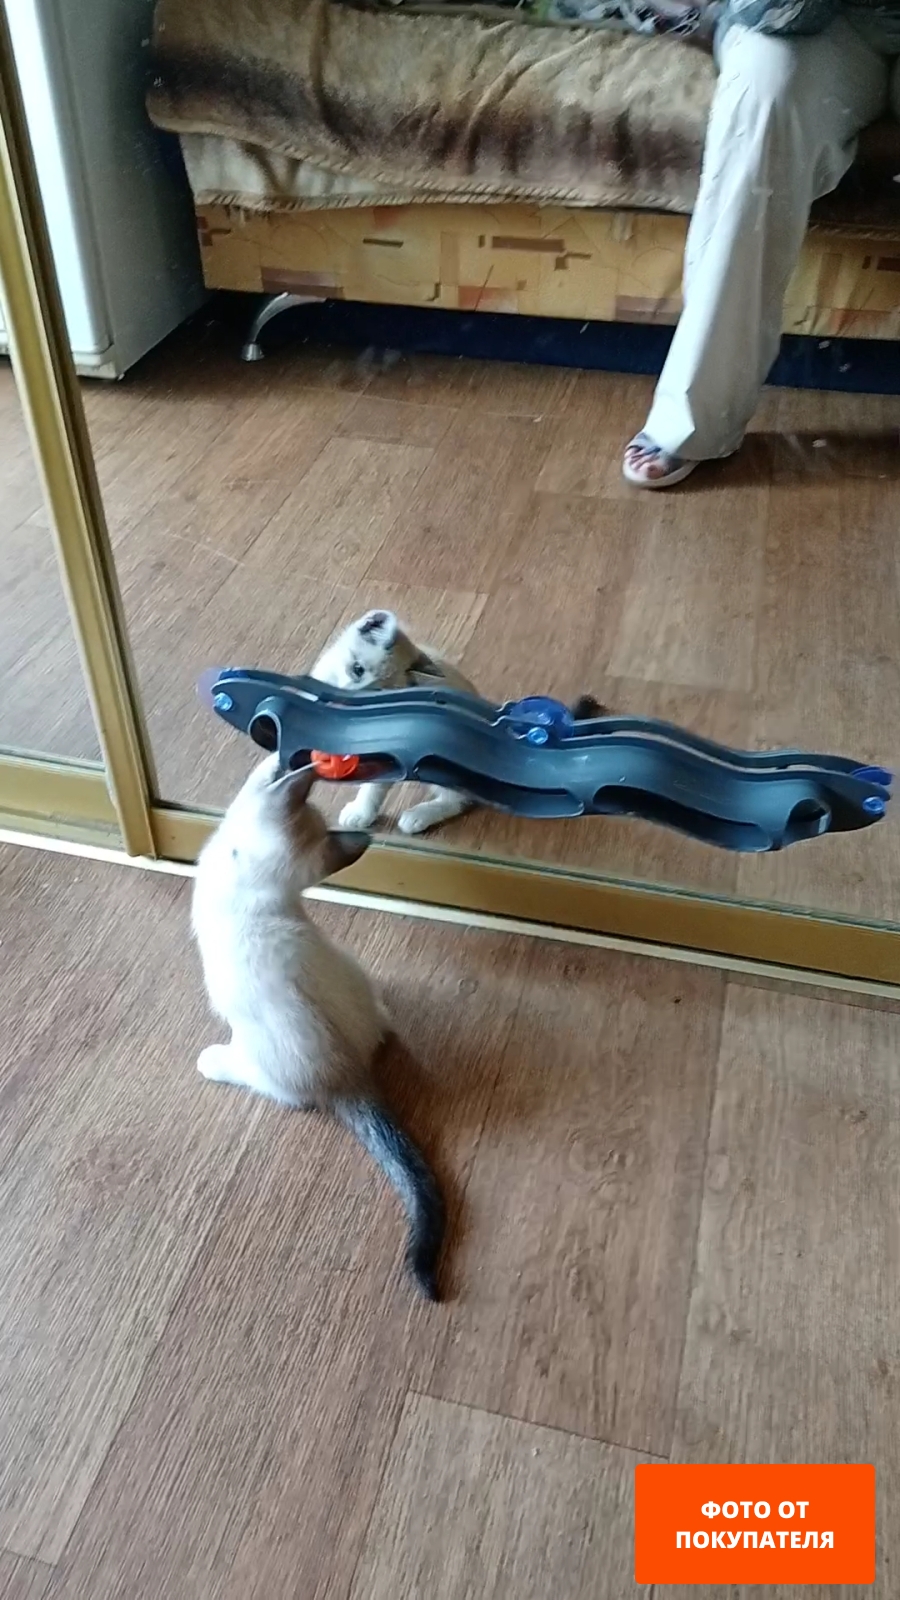 Игрушка для кошек TRIXIE Fix & Catch с креплением на стекло 45 см (41416)